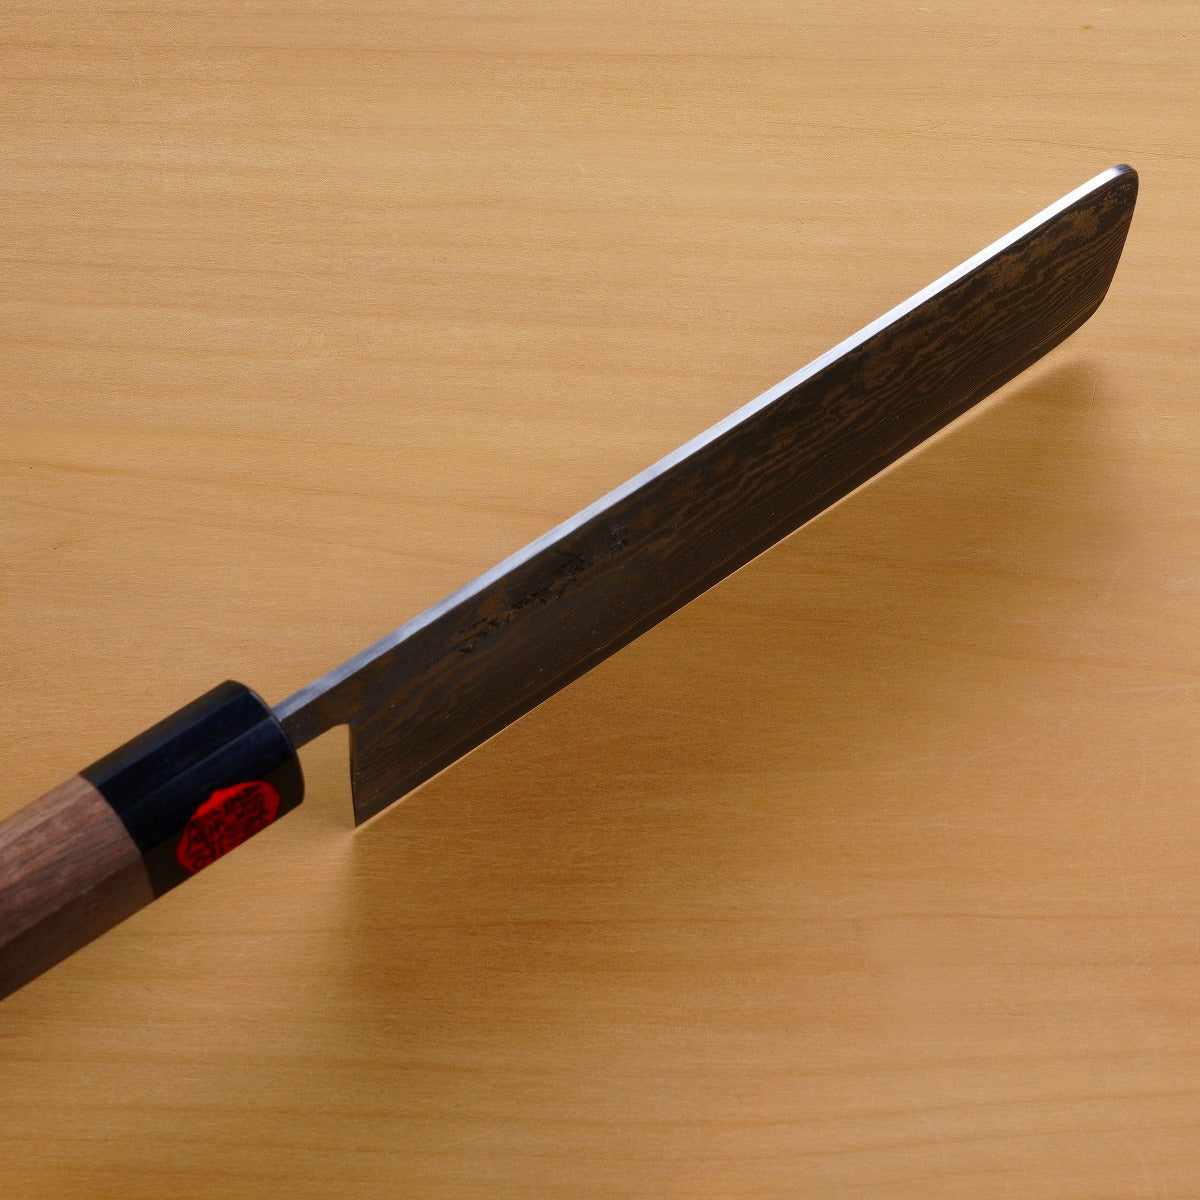 "HARUKAZE" Nakiri (Vegetable Knife) Powdered HSS R2 Damascus with Walnut Handle, 165mm